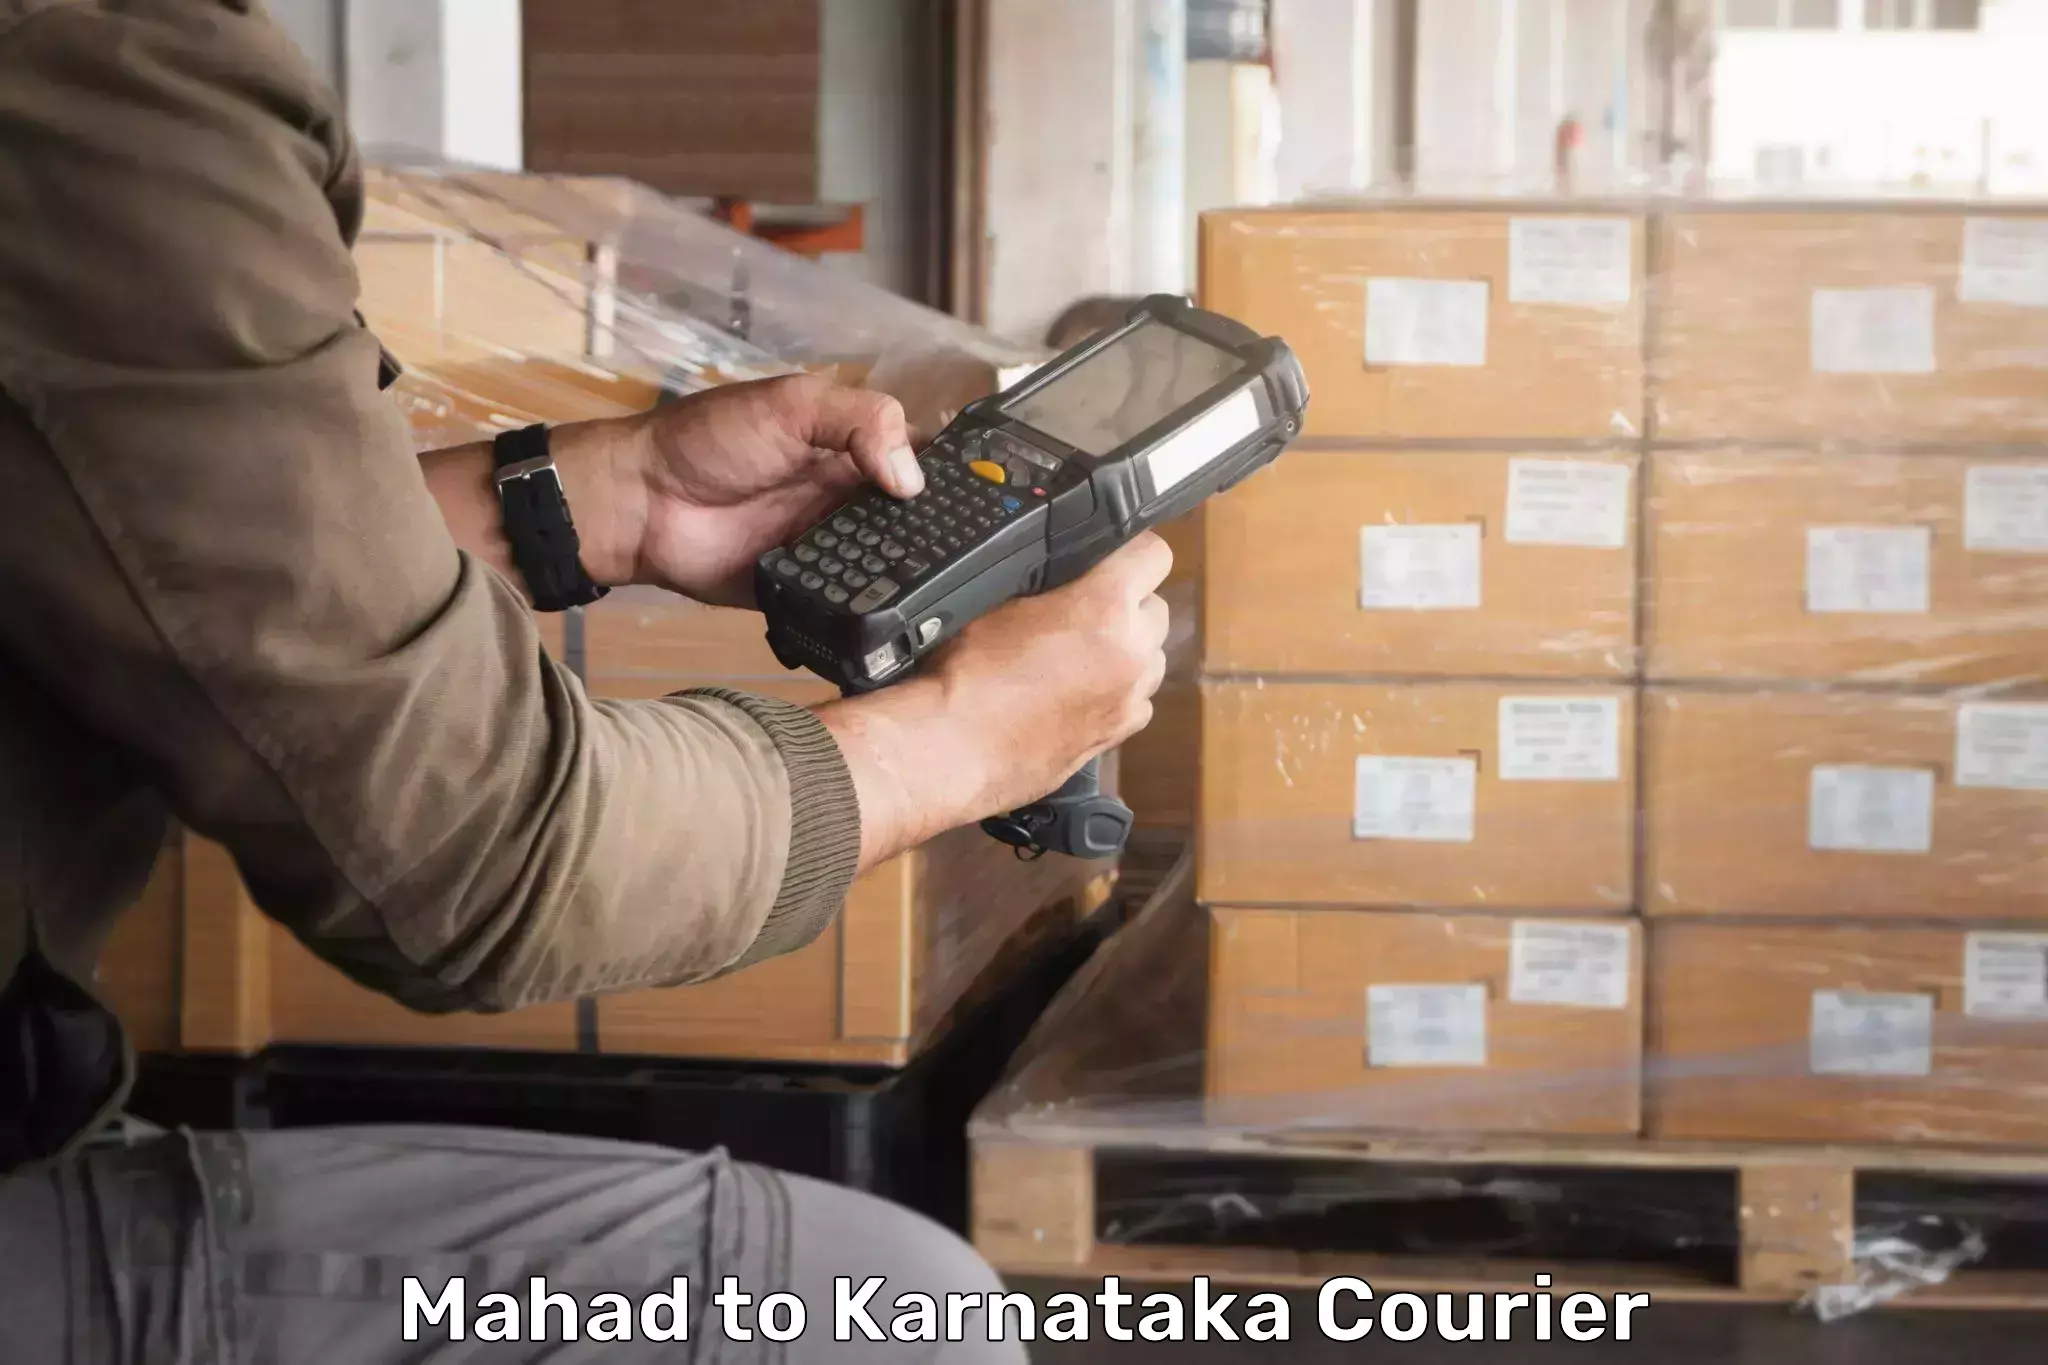 Package delivery network Mahad to Karnataka